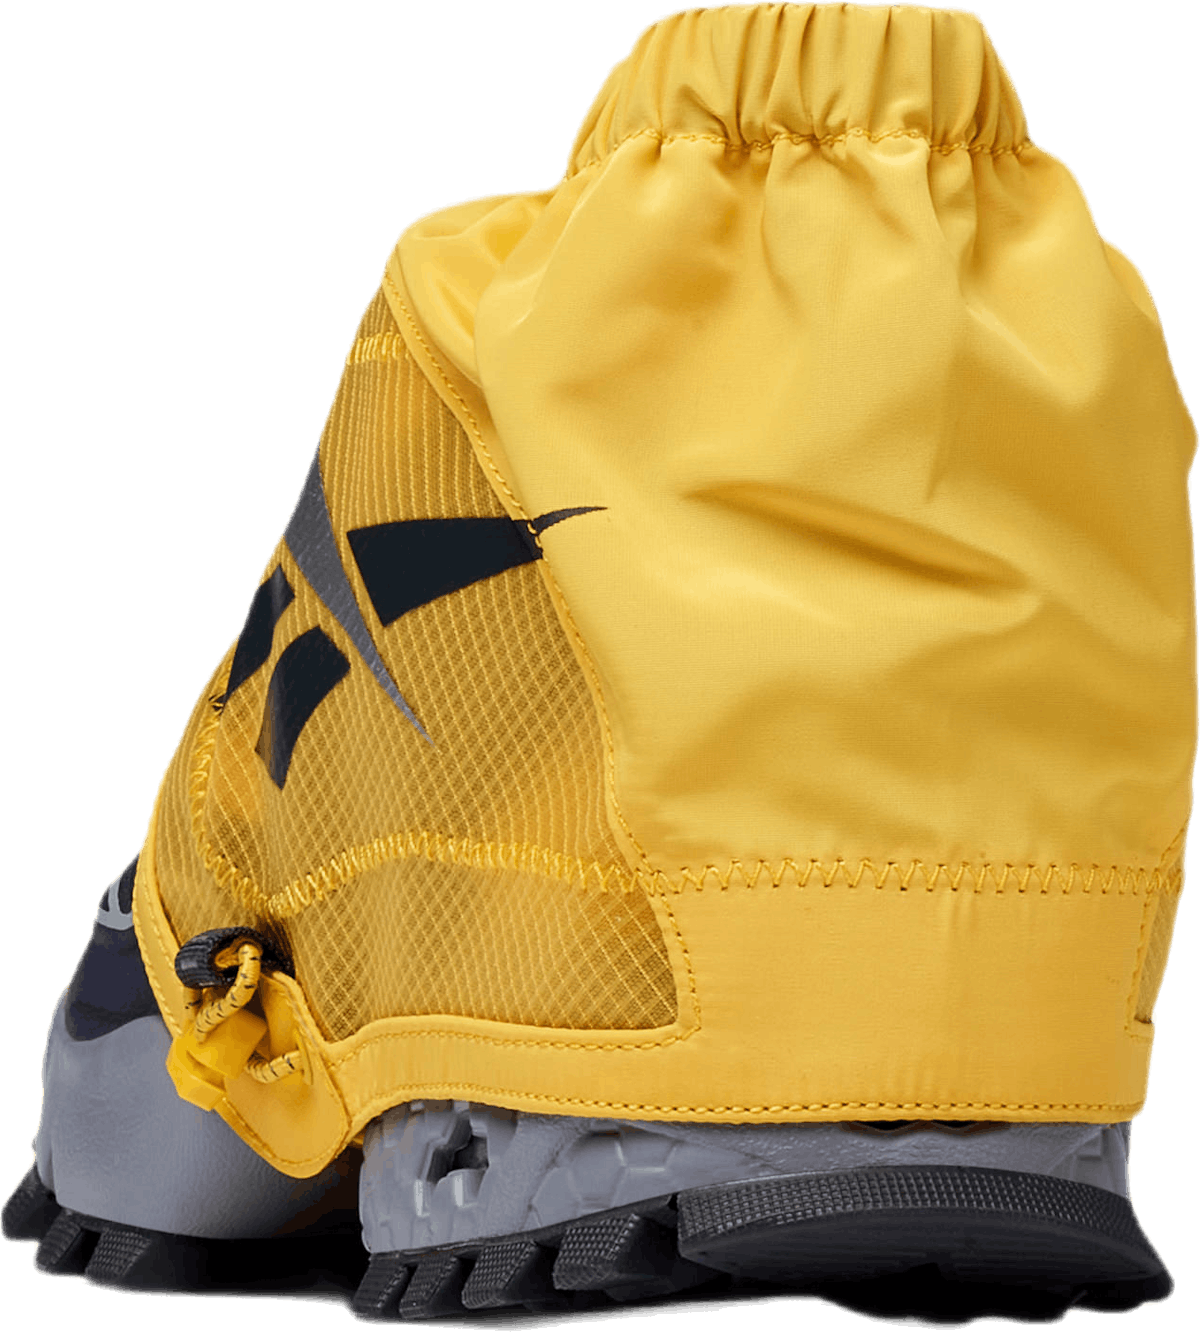 Instapump Fury Trail Shroud Yellow